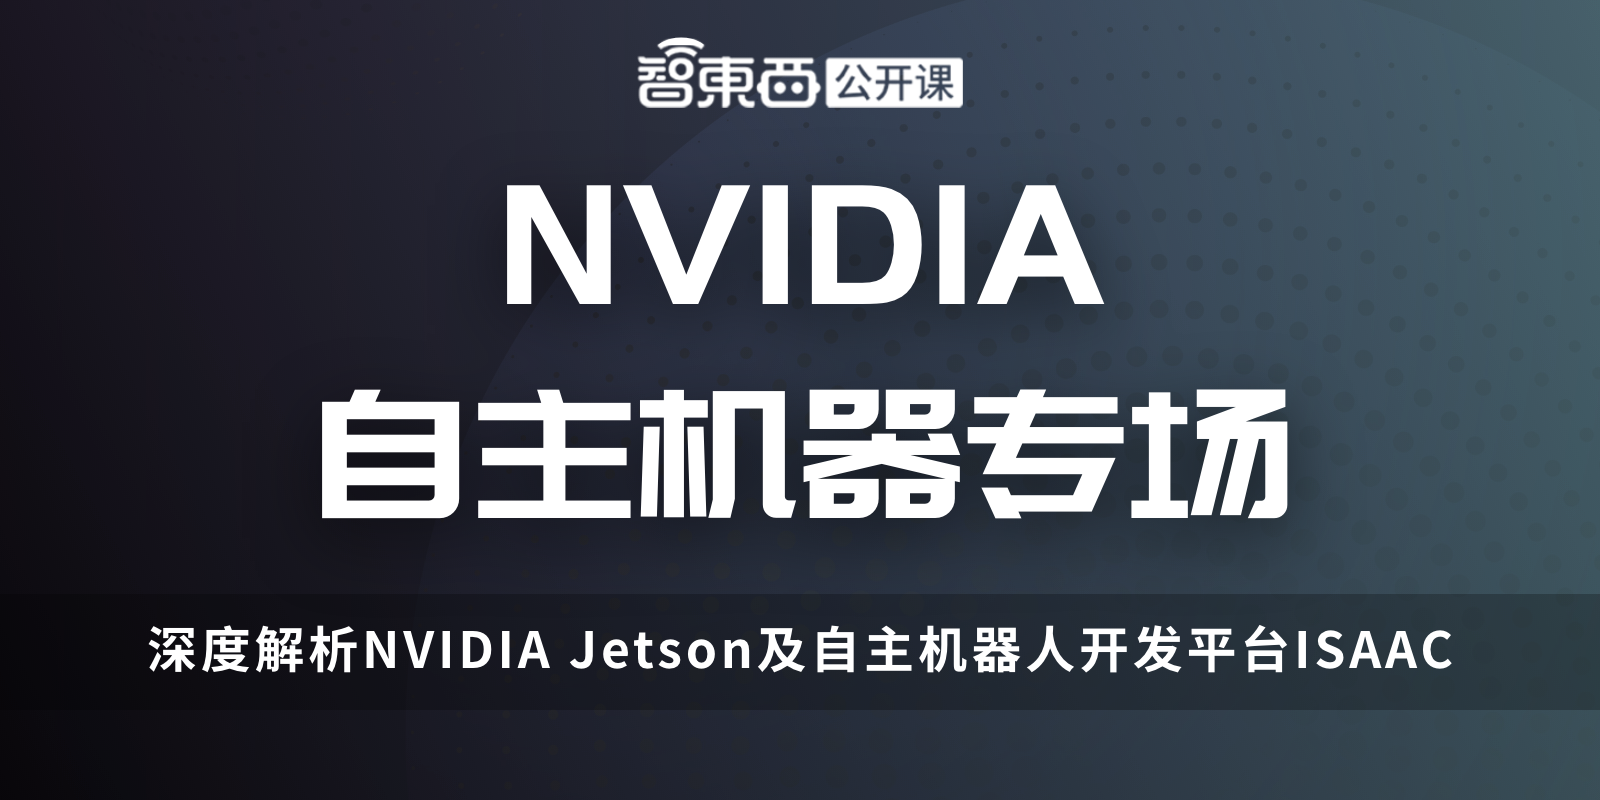 NVIDIA 自主机器专场上线，深度解析NVIDIA Jetson及自主机器人开发平台ISAAC | 专场直播预告